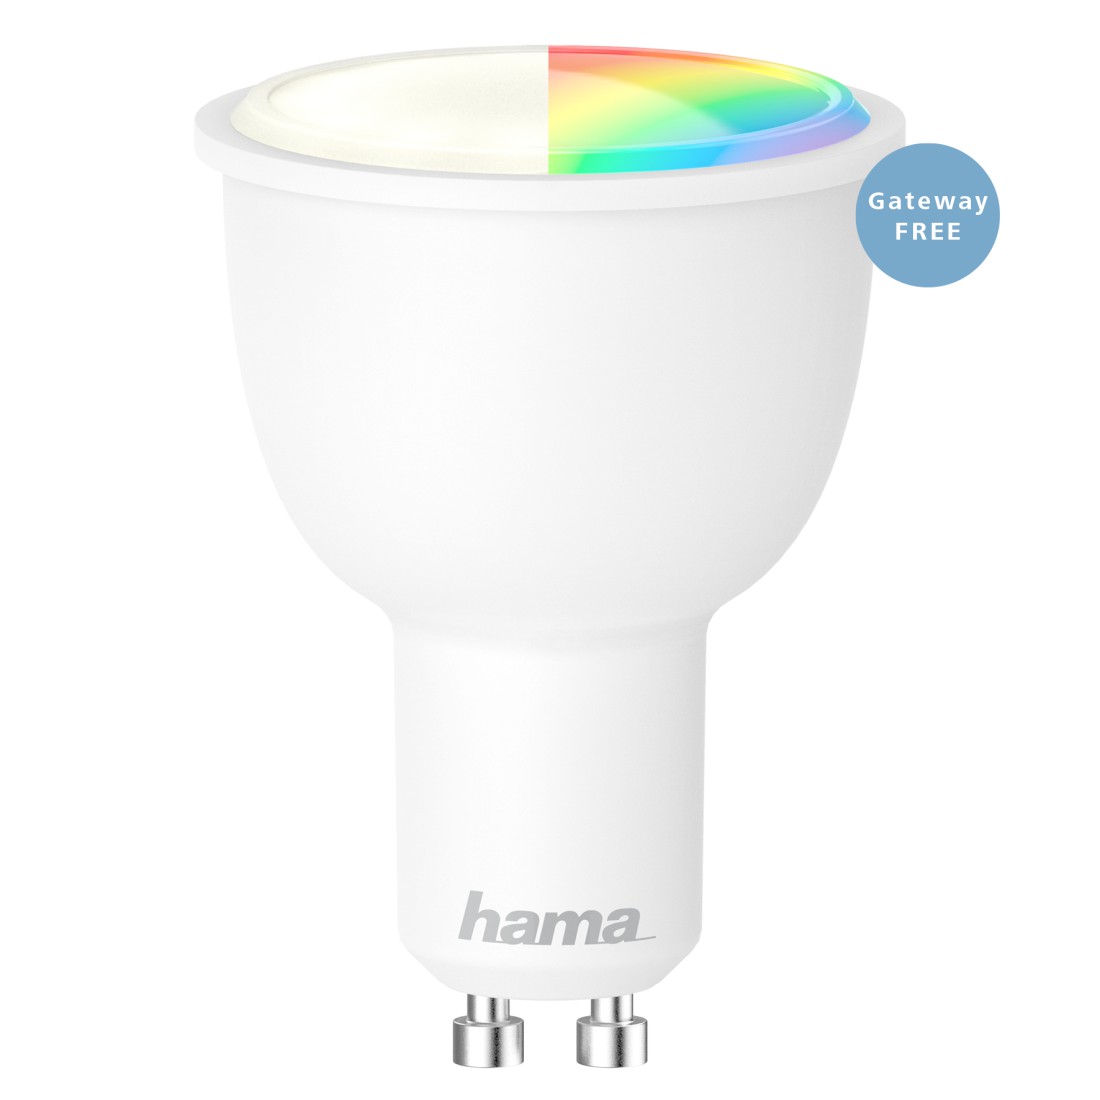 00176532 Hama WiFi-LED Light, GU10, 4.5W, RGB, can be dimmed | hama.com